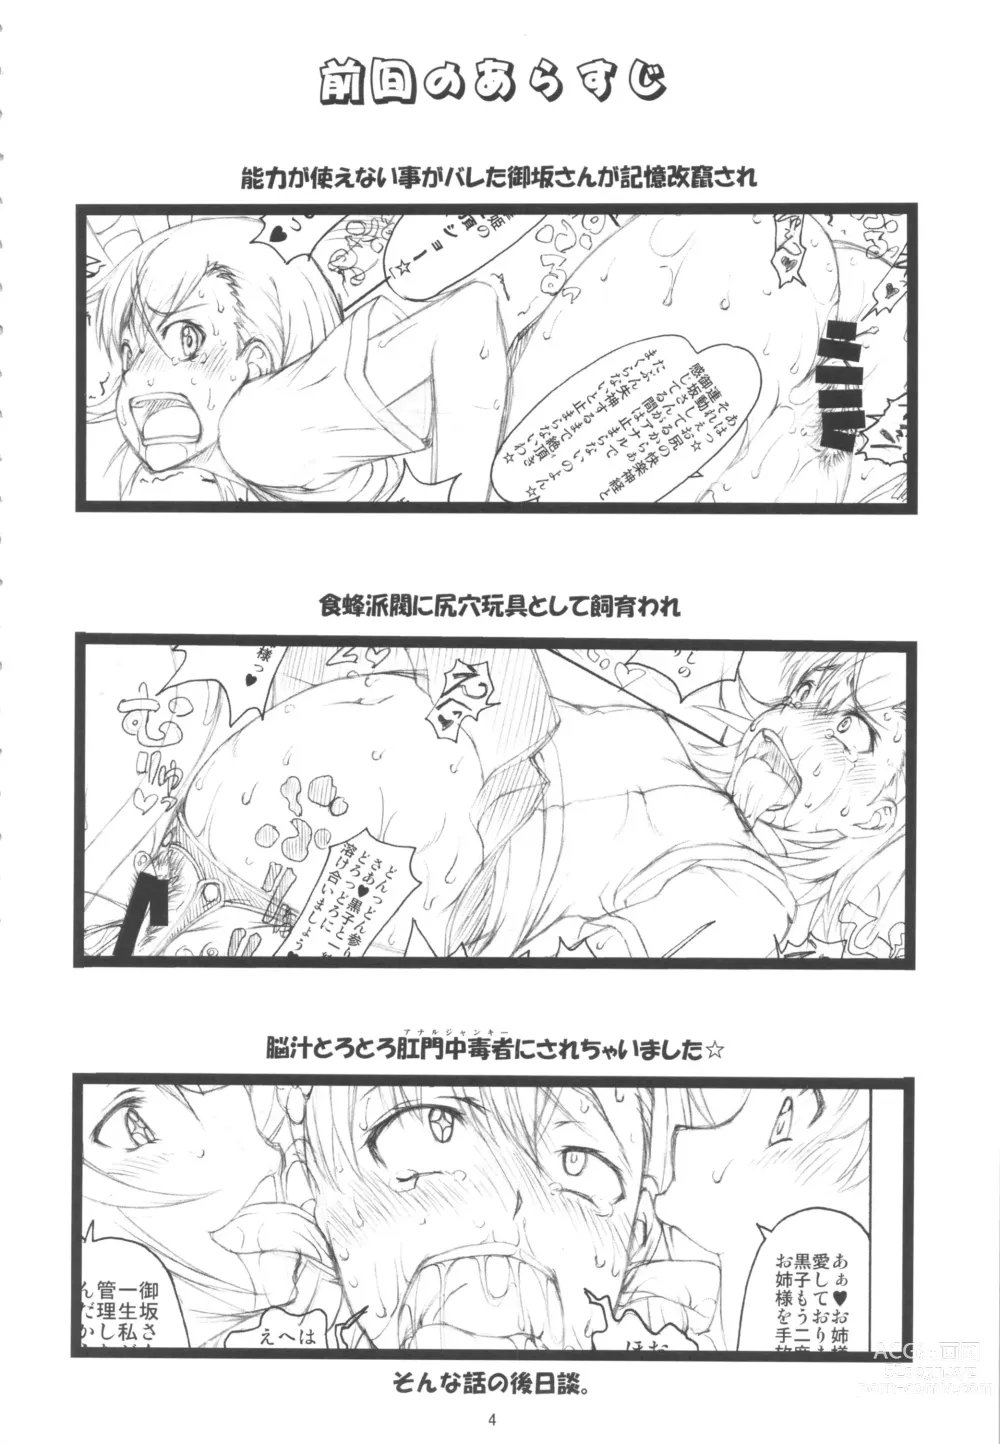 Page 3 of doujinshi Oneesama Enkou Rankou Video Library